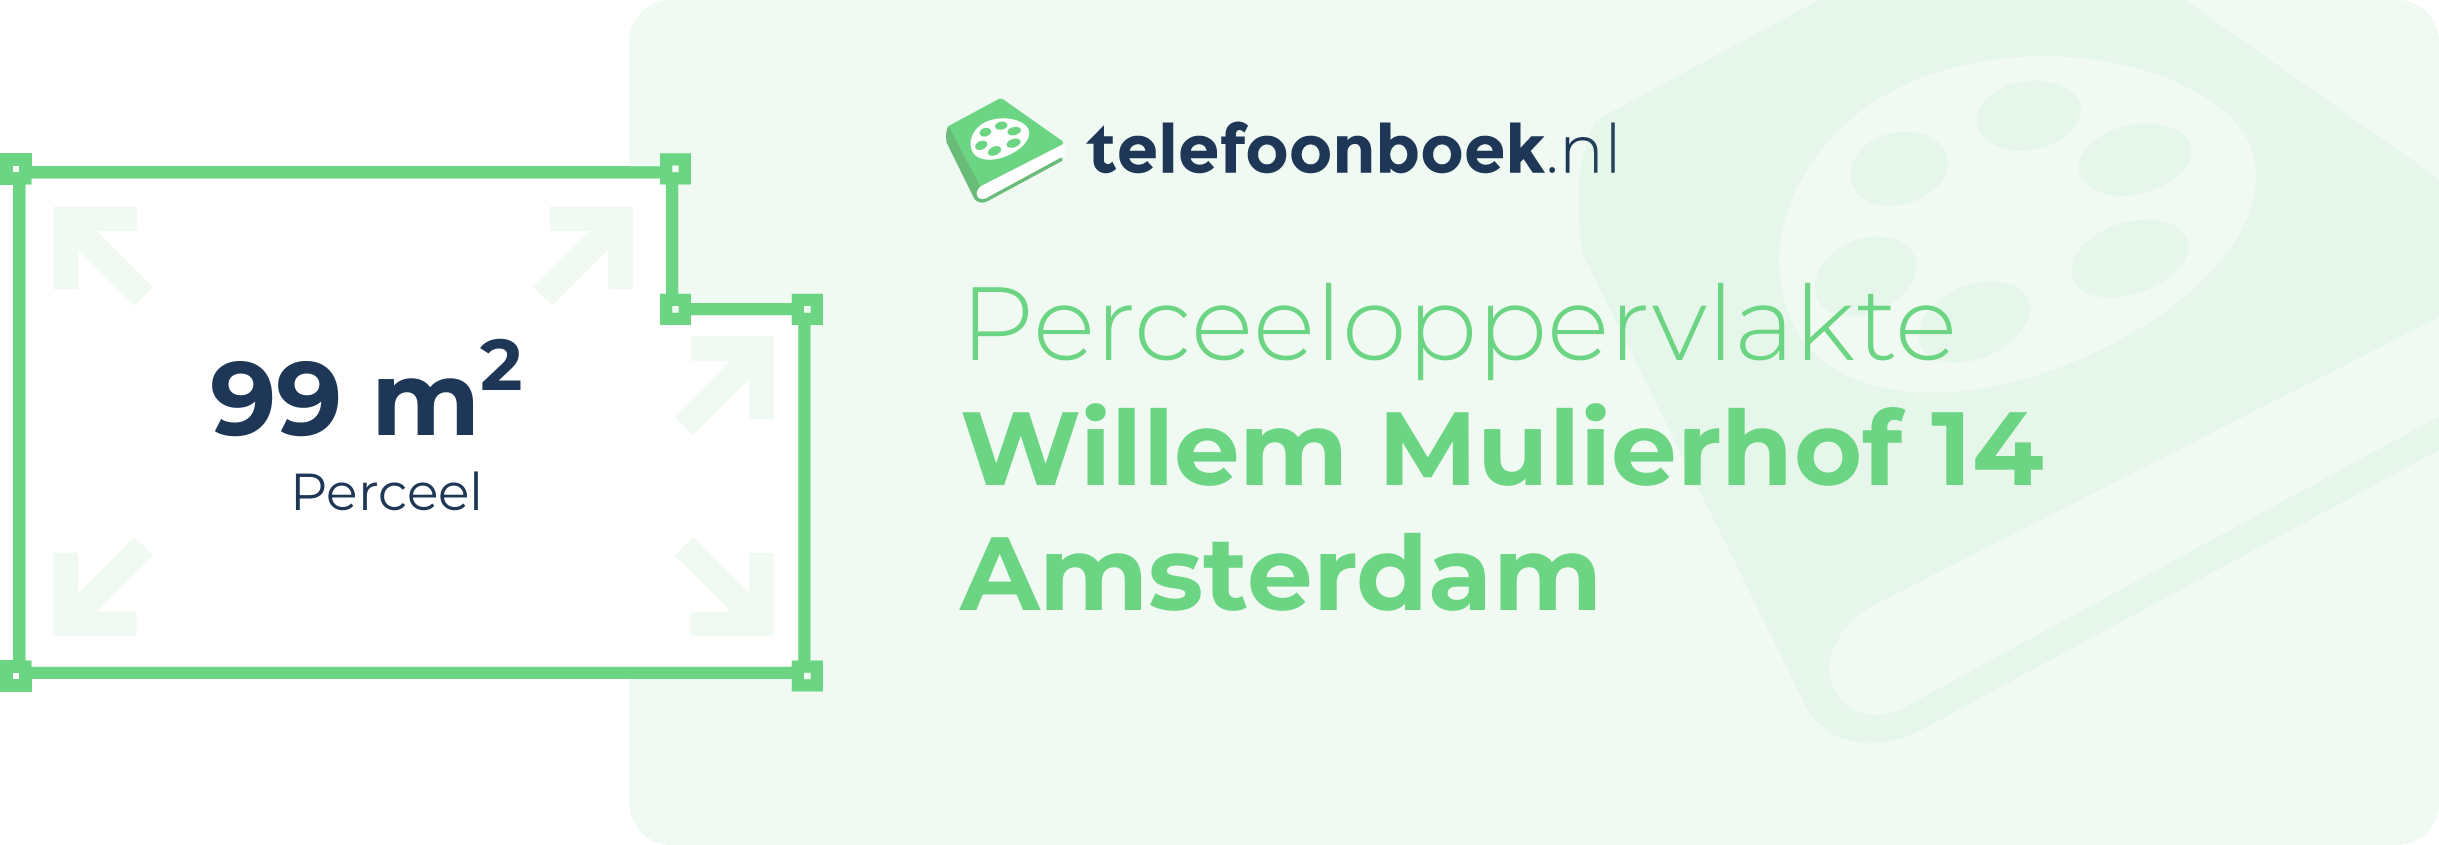 Perceeloppervlakte Willem Mulierhof 14 Amsterdam